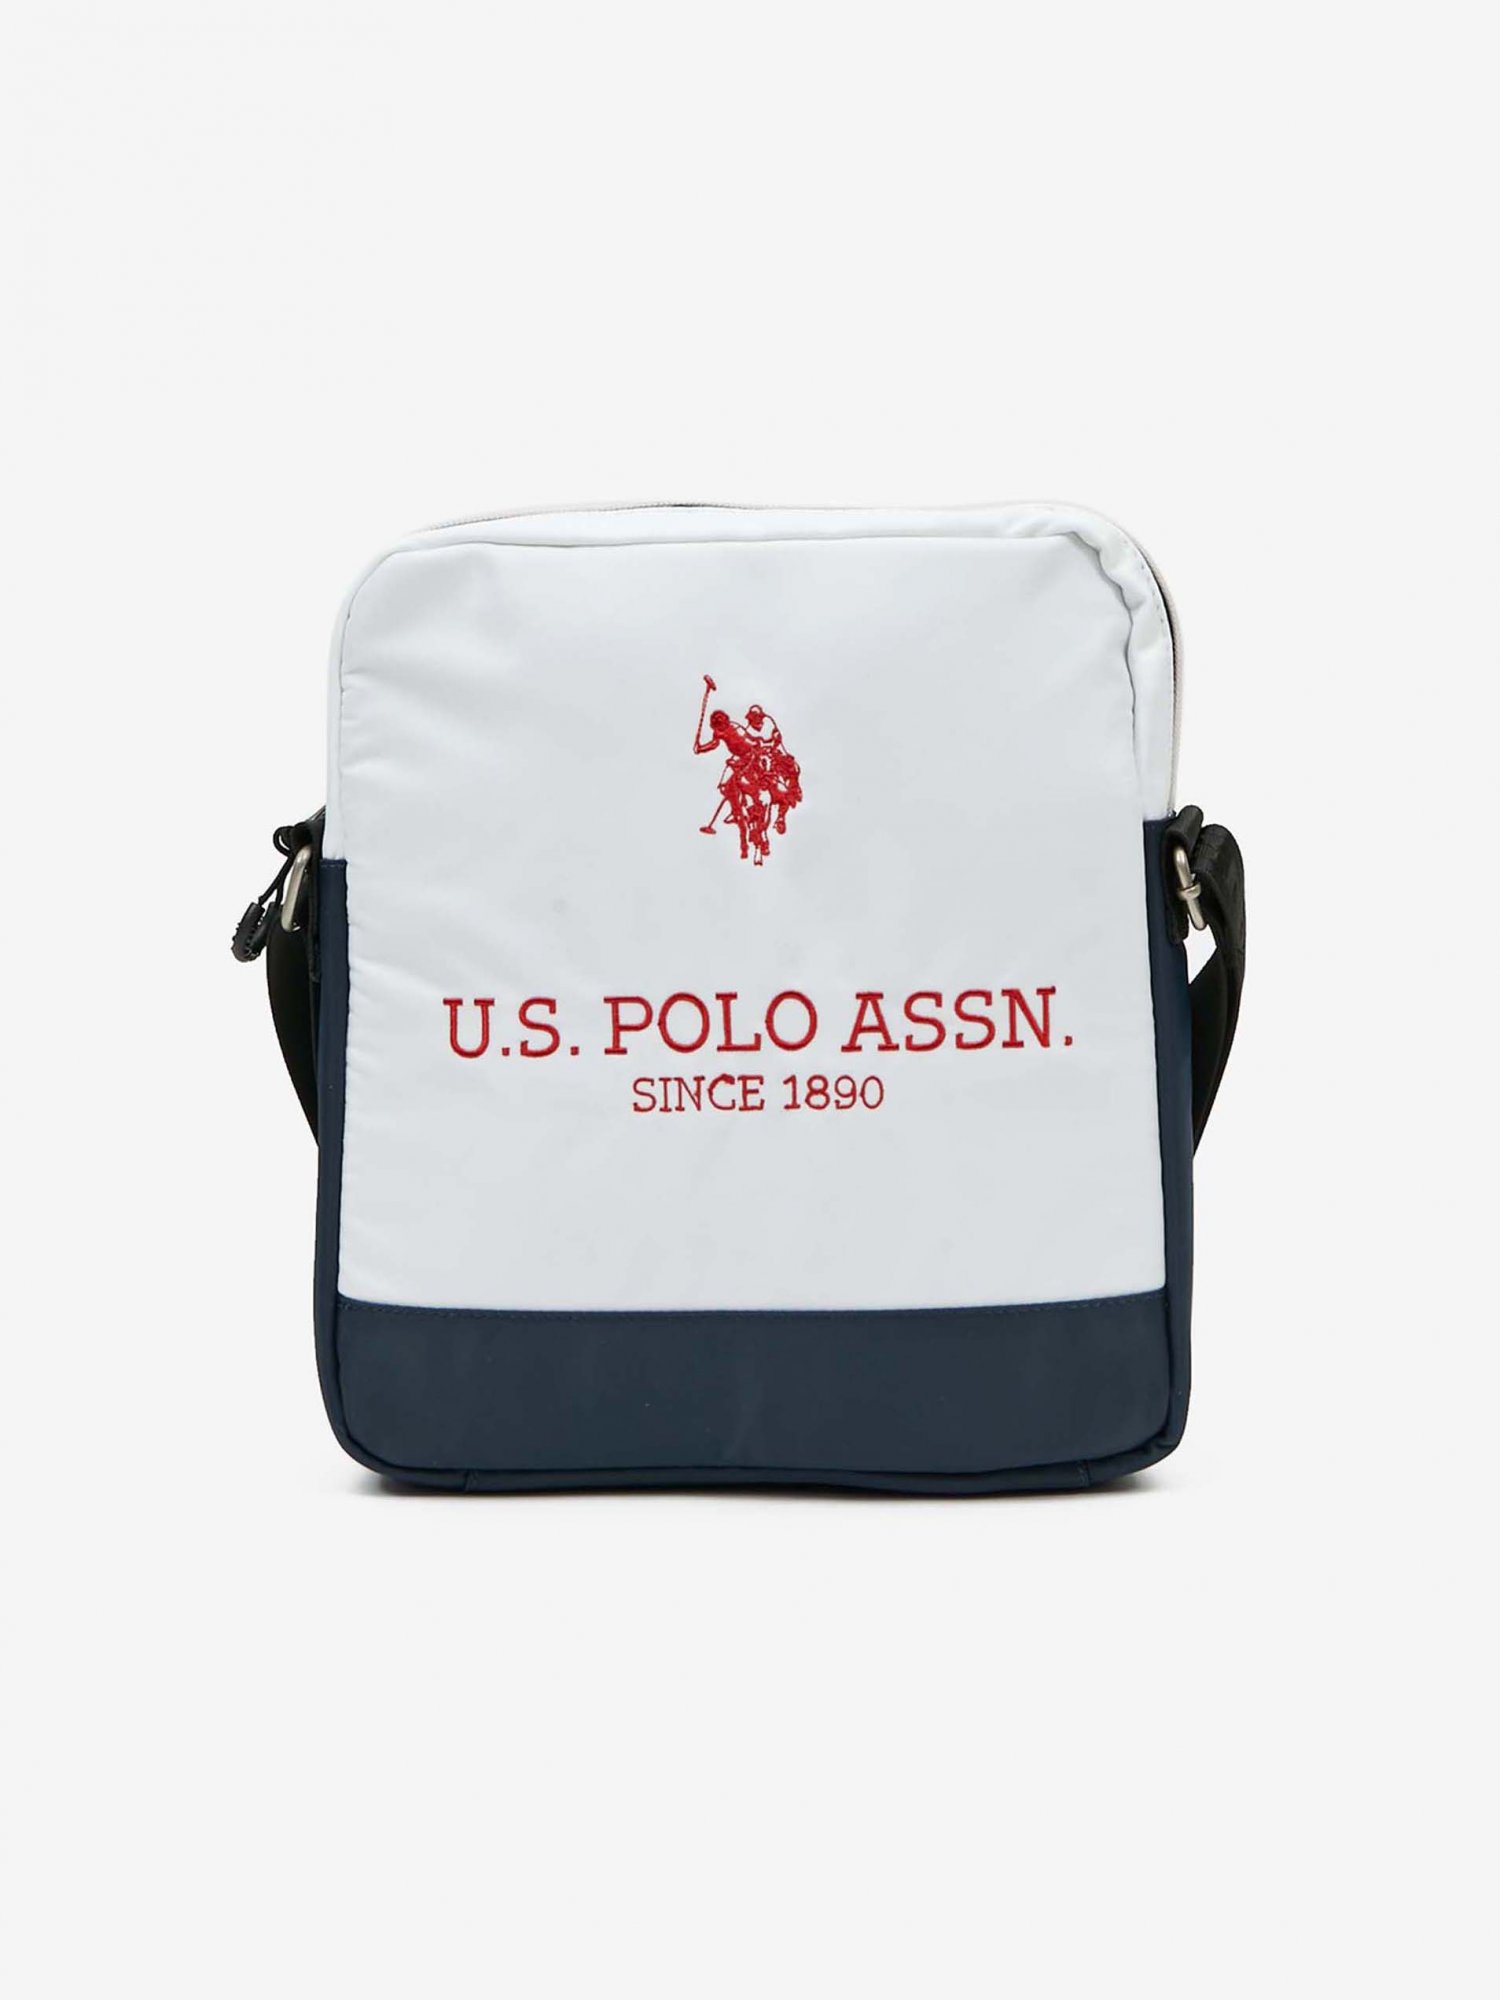 Modro-bílá dámská crossbody kabelka U.S. Polo Assn.